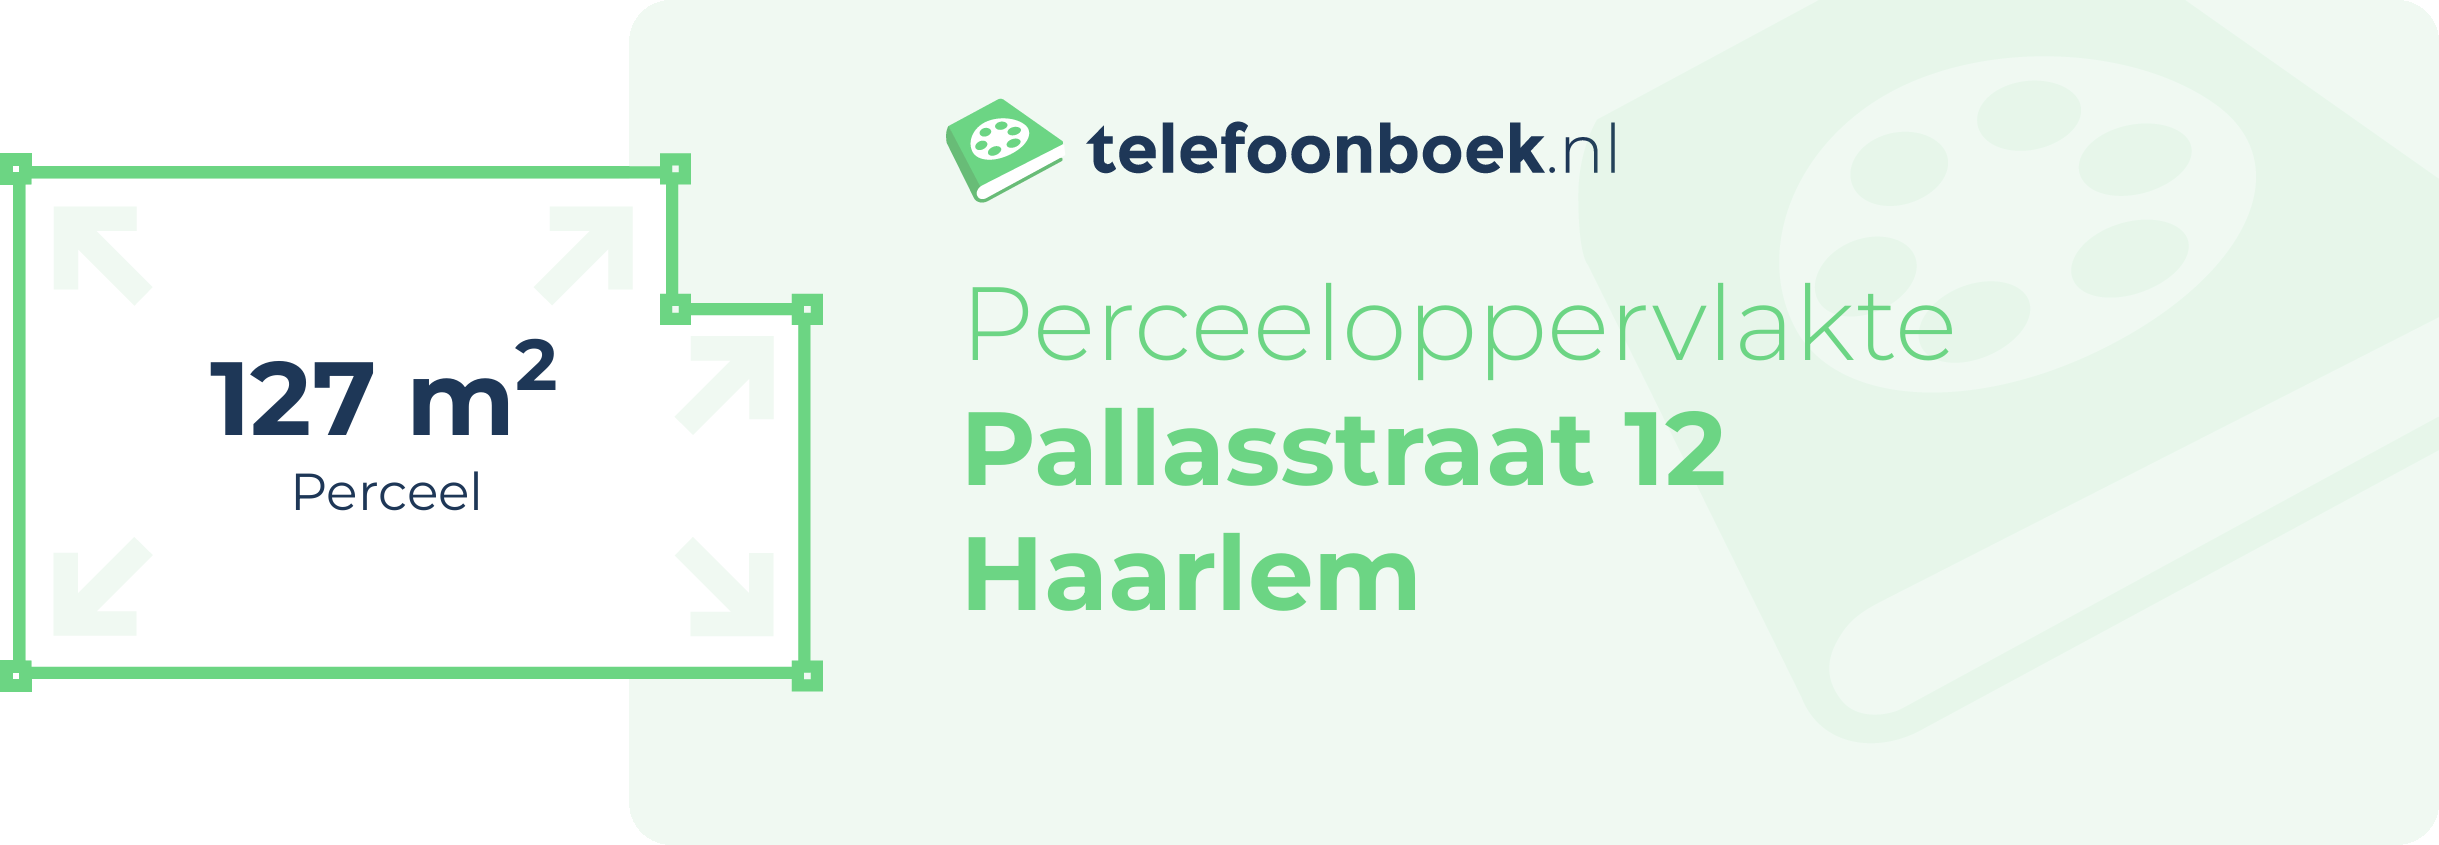 Perceeloppervlakte Pallasstraat 12 Haarlem